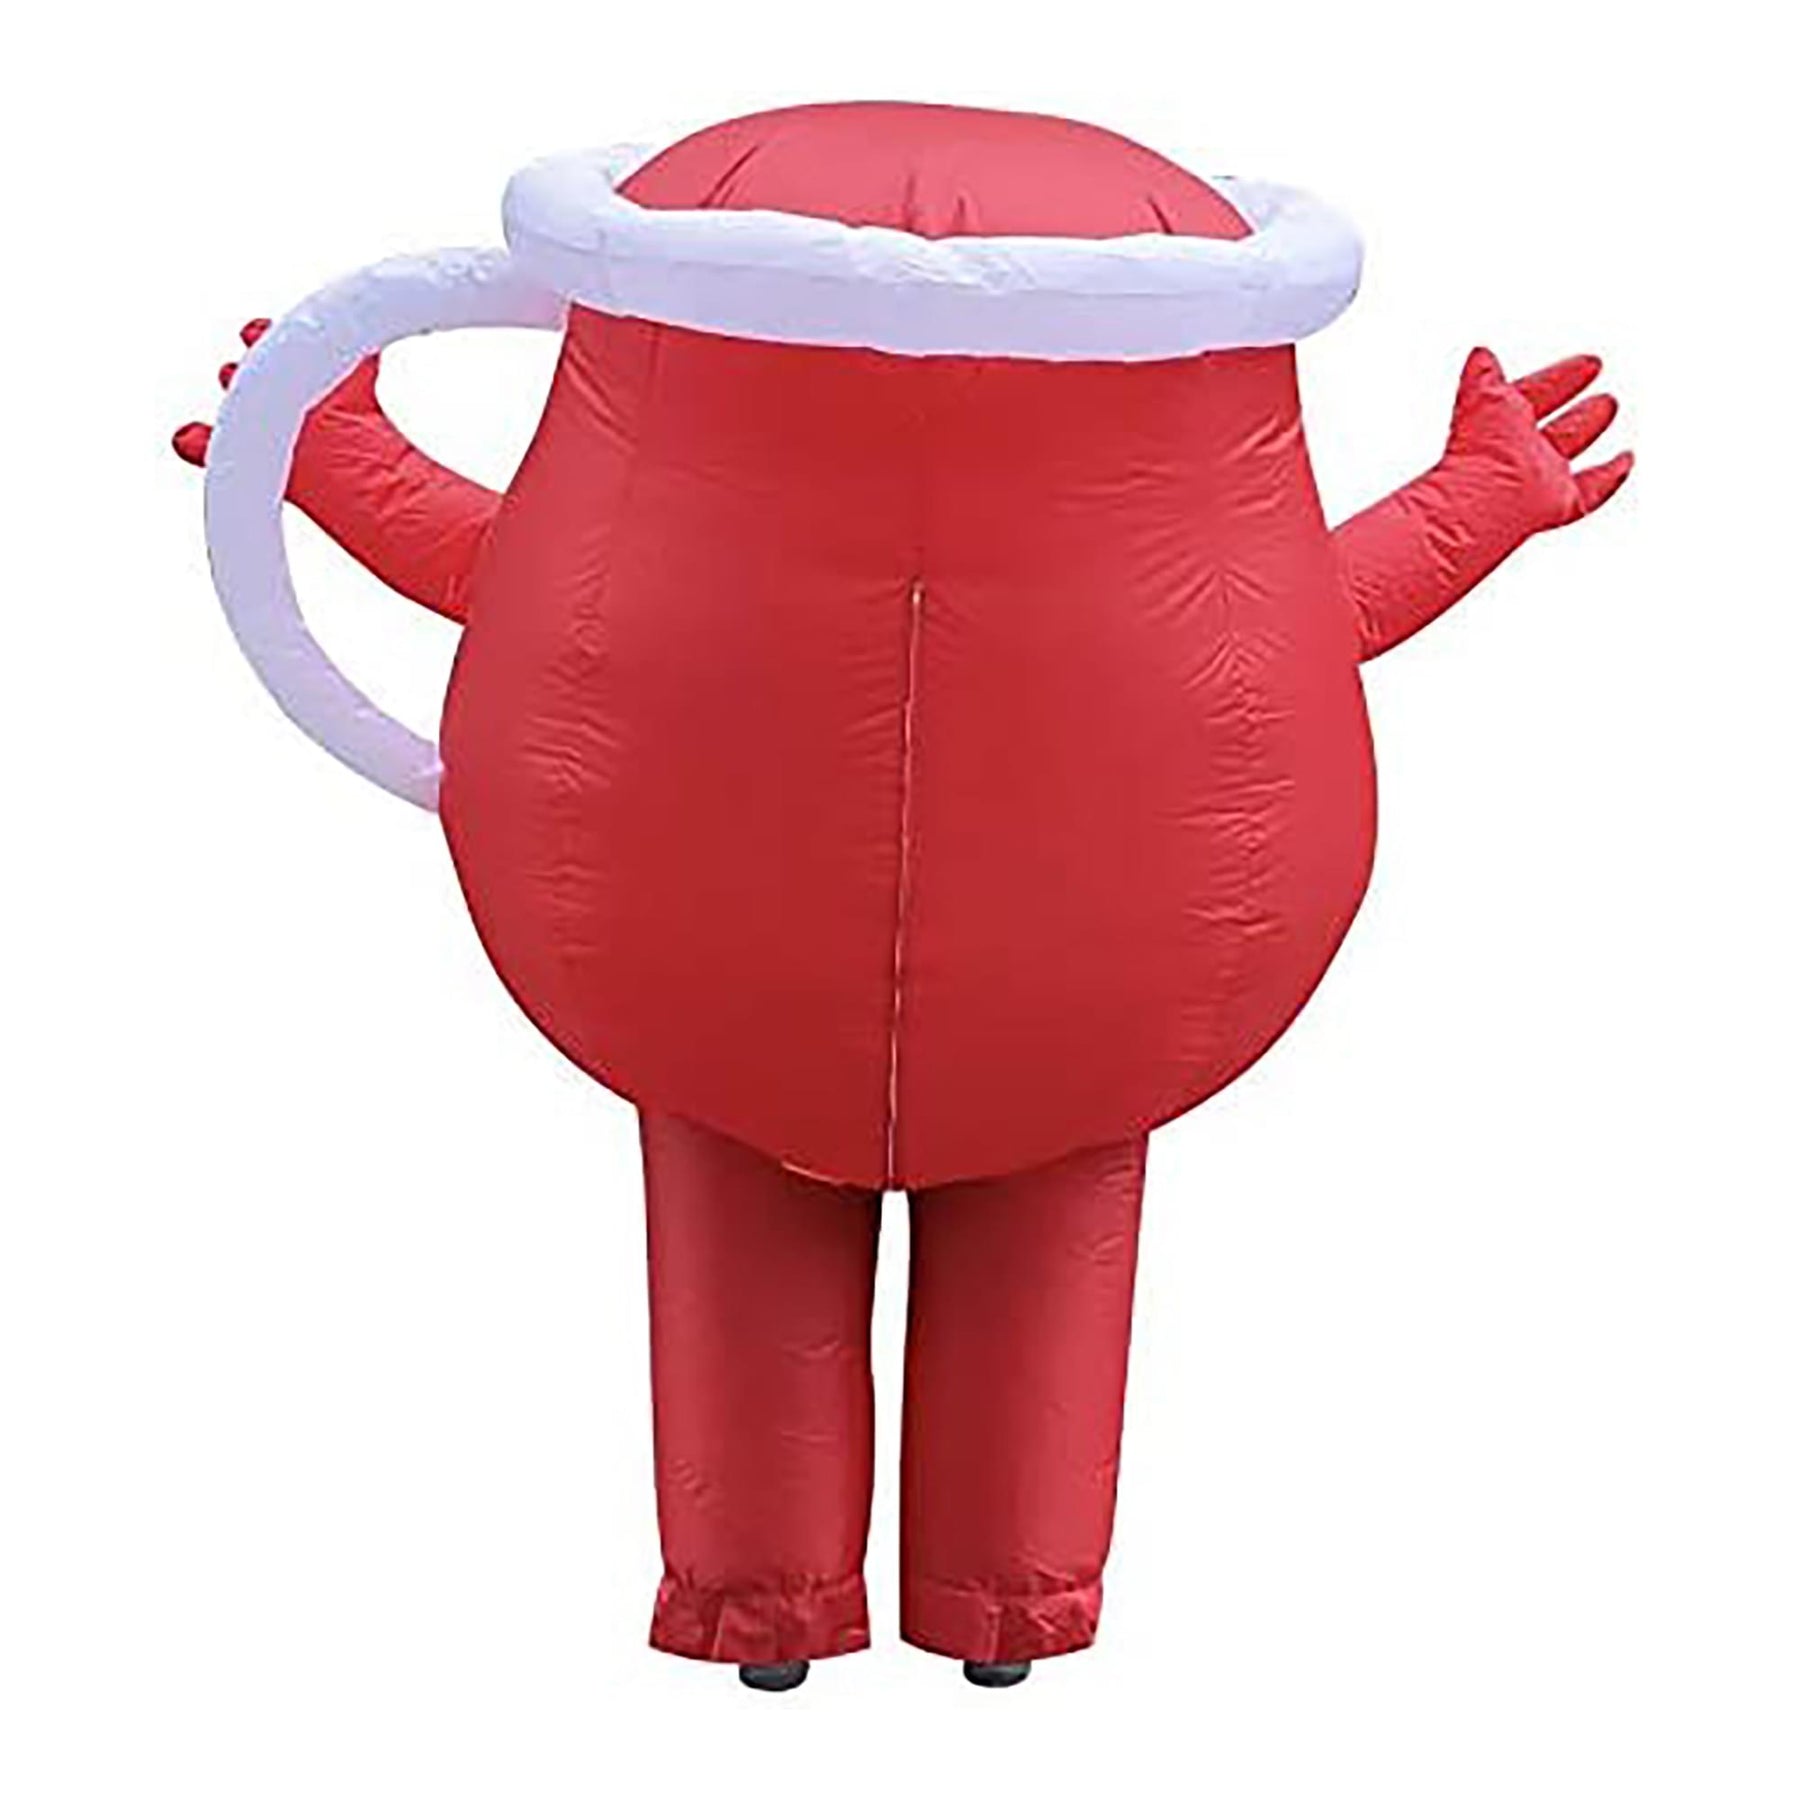 Kool-Aid Man Inflatable Adult Costume | One Size